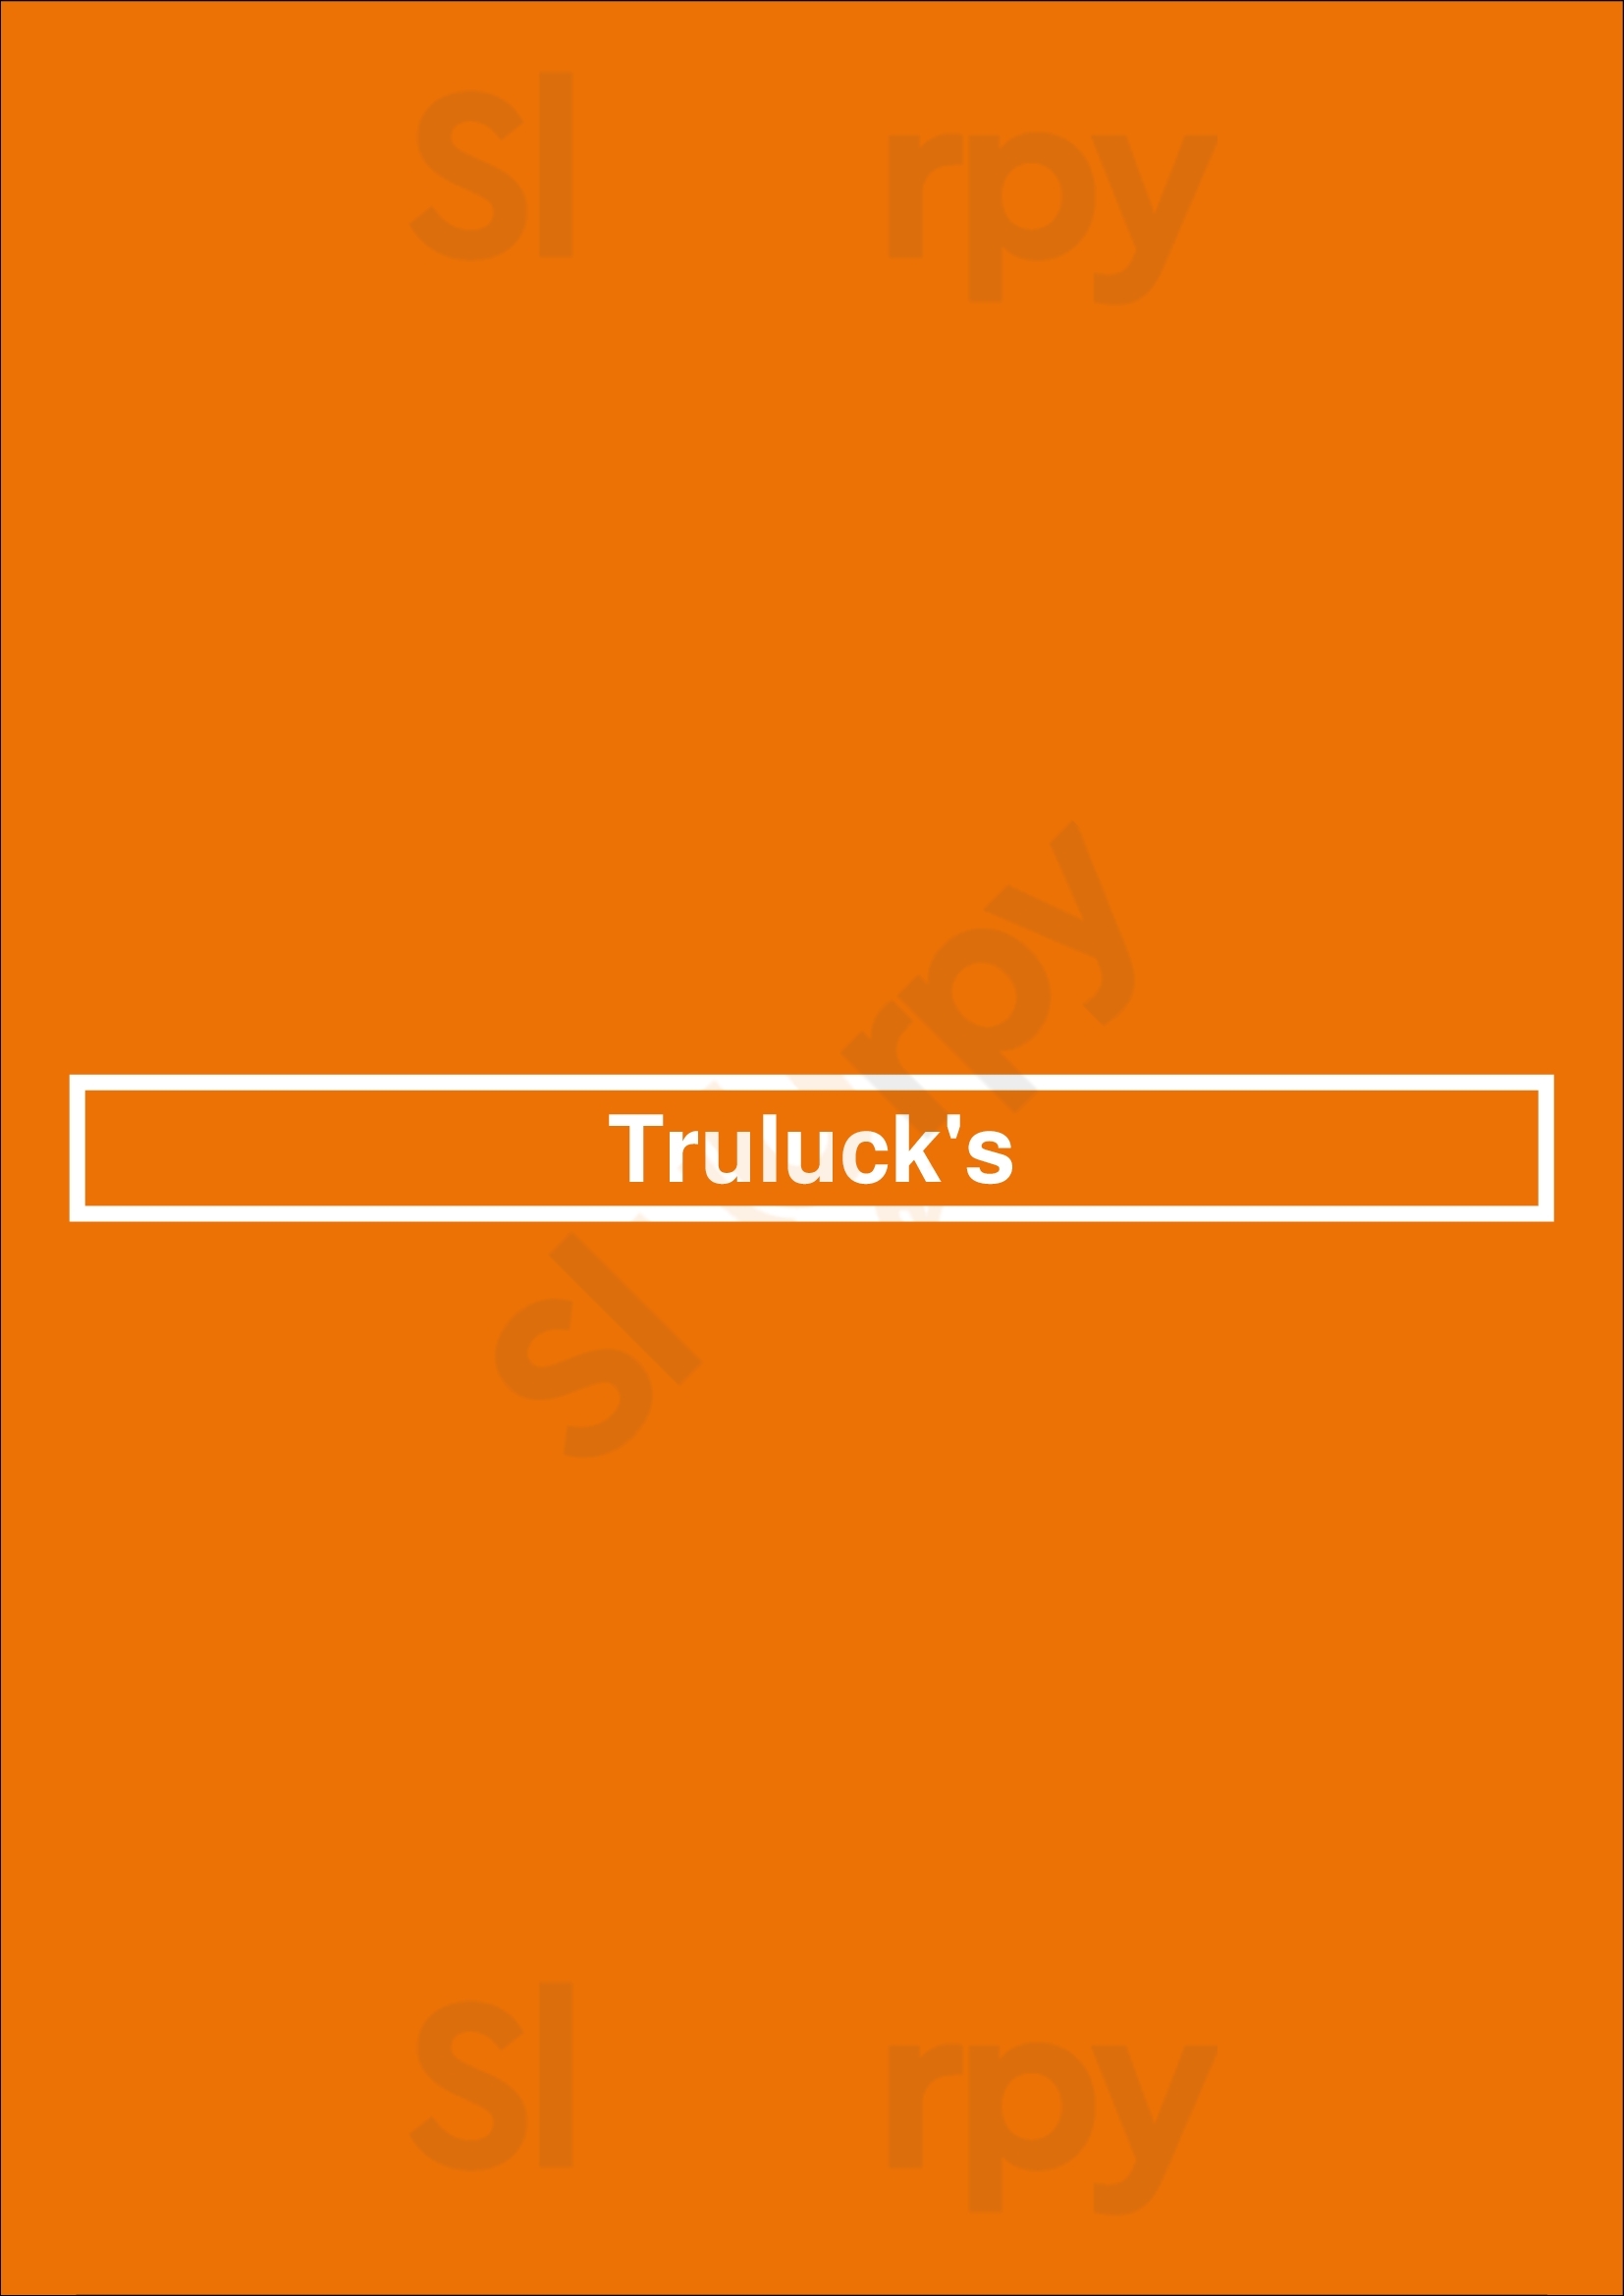 Truluck's Chicago Menu - 1